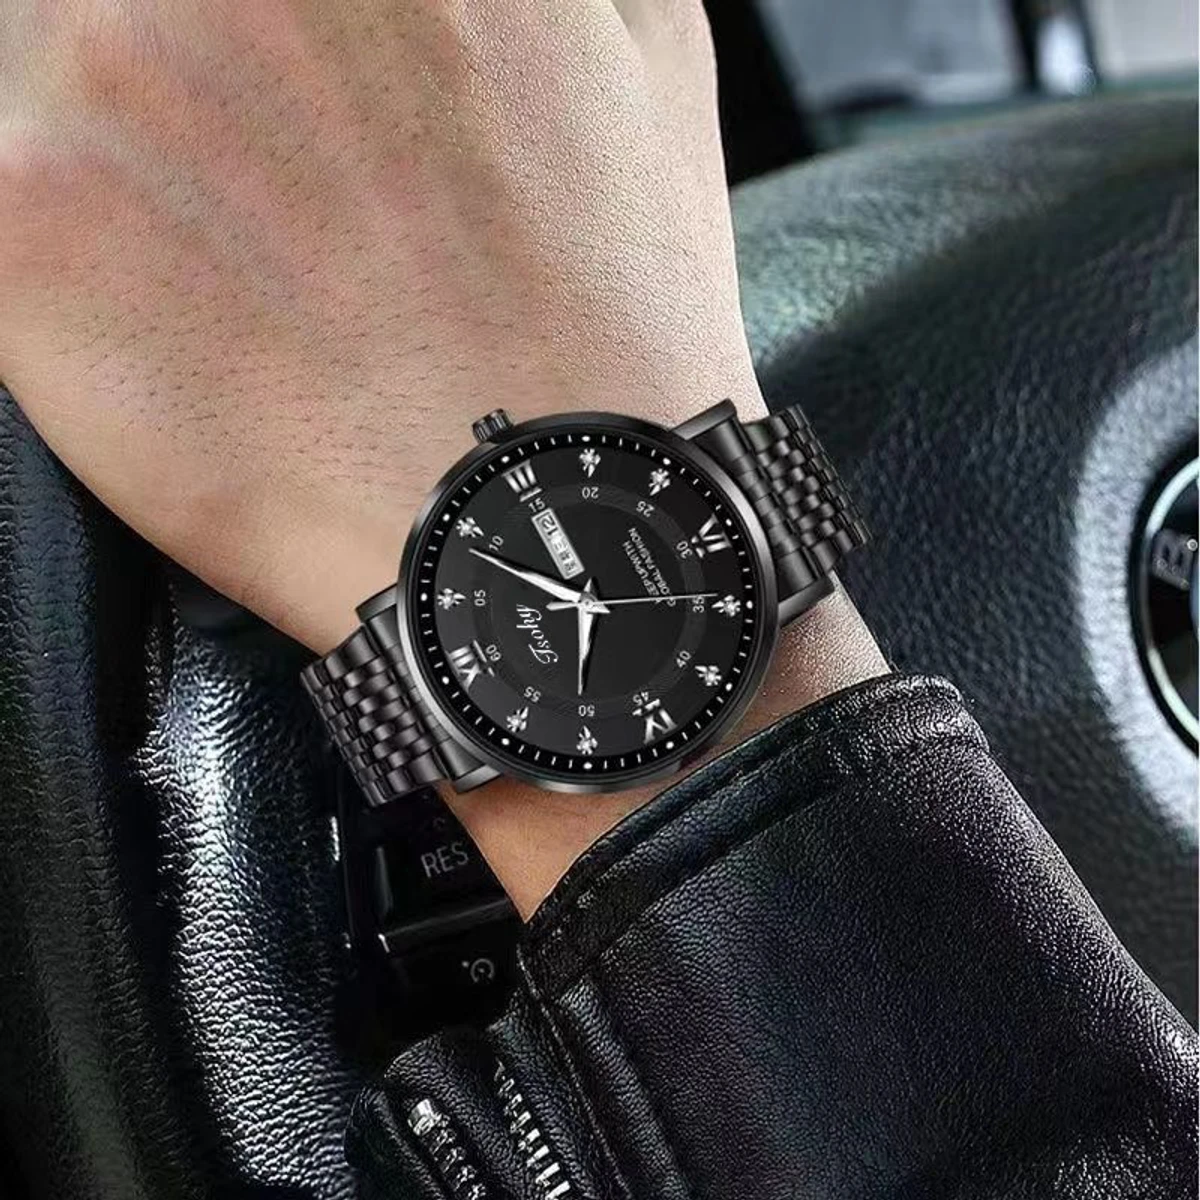 Luxury ISOHY authentic men's watch waterproof night light dual calendar watch men's quartz watch ceiling glass- Black